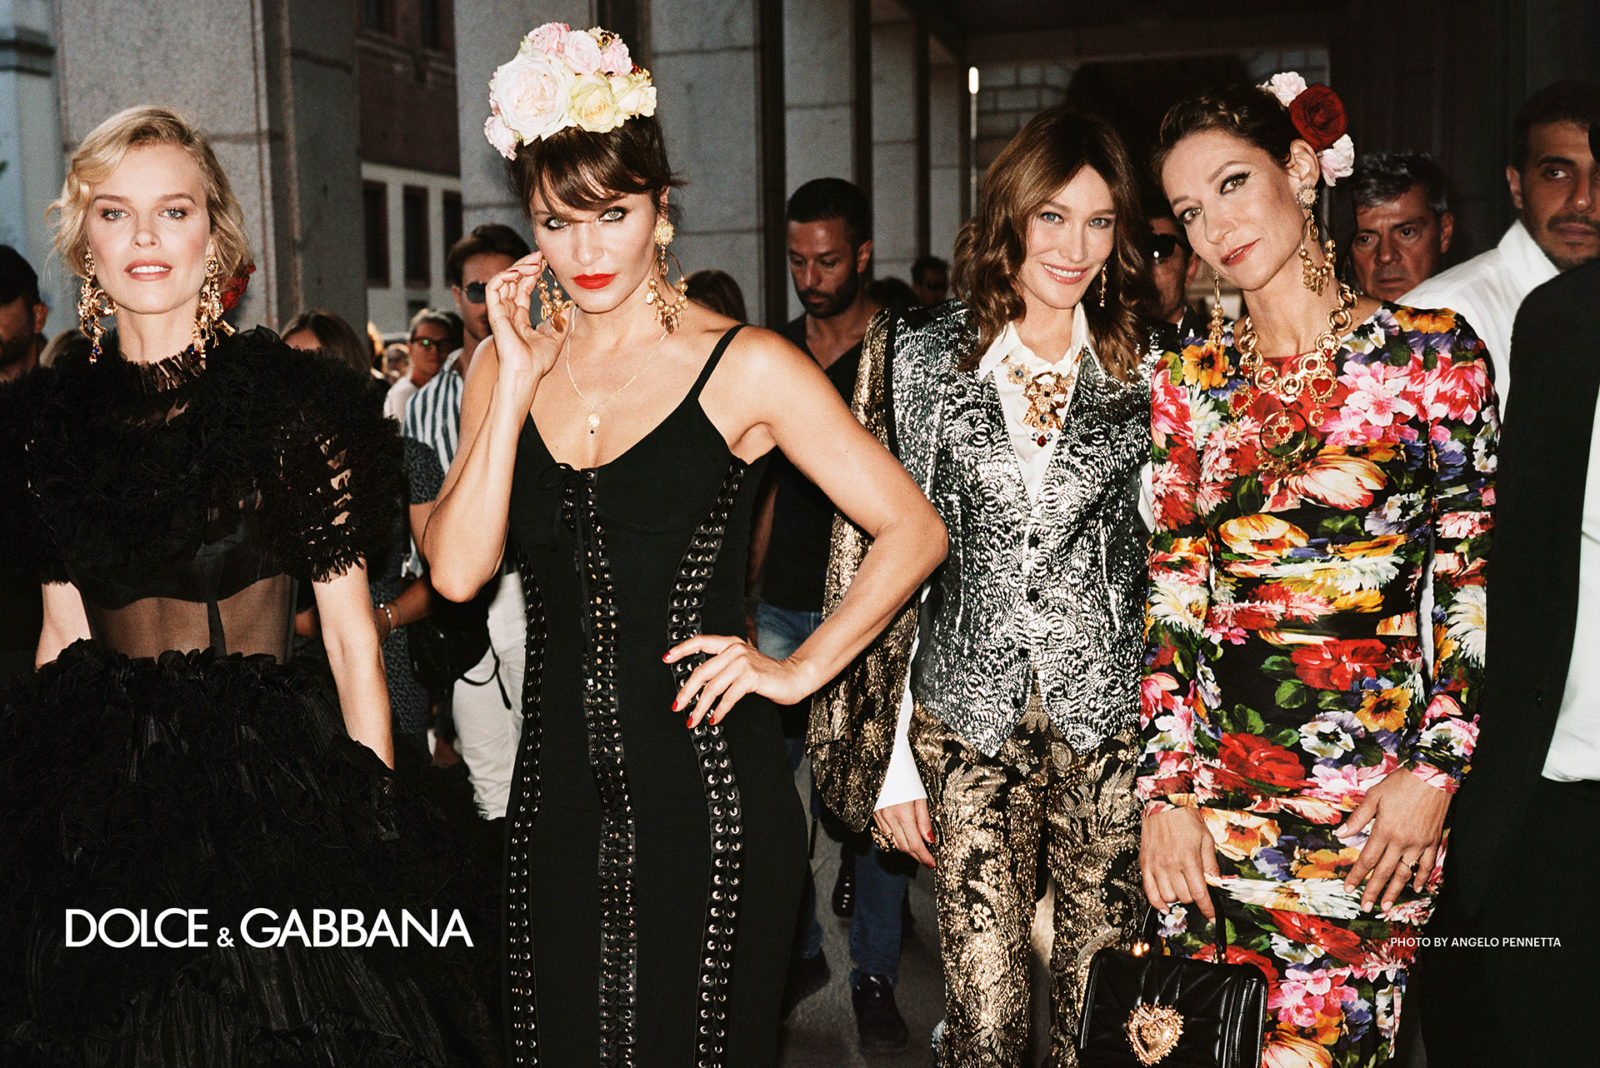 Dolce \u0026 Gabbana Scandal May Be Old News 